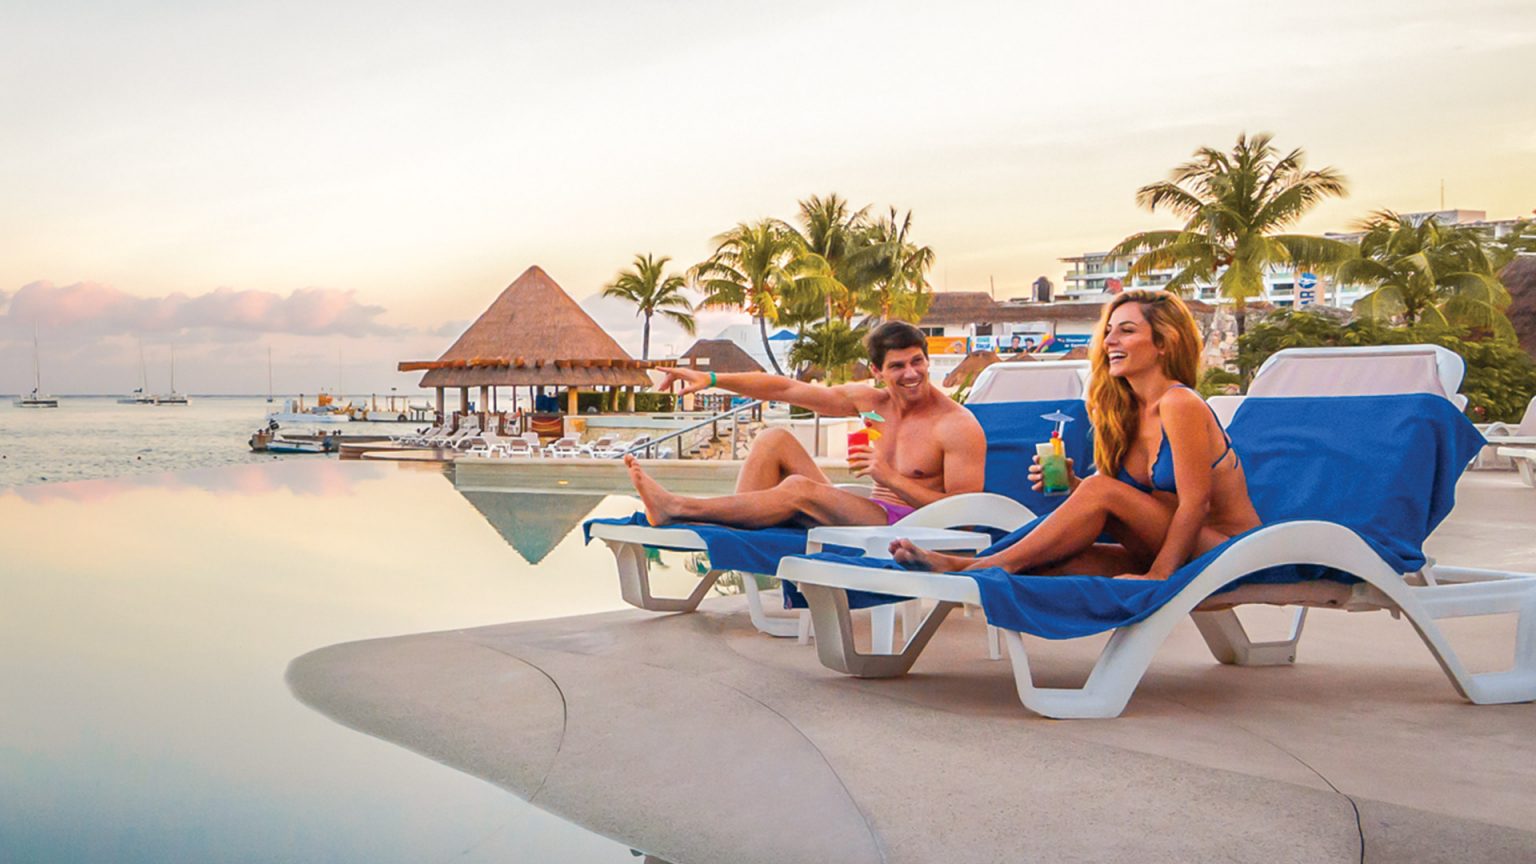 royal-holiday-hotel-resort-pareja-piscina-grand-park-royal-cozumel-mexico-cozumel-1536x864